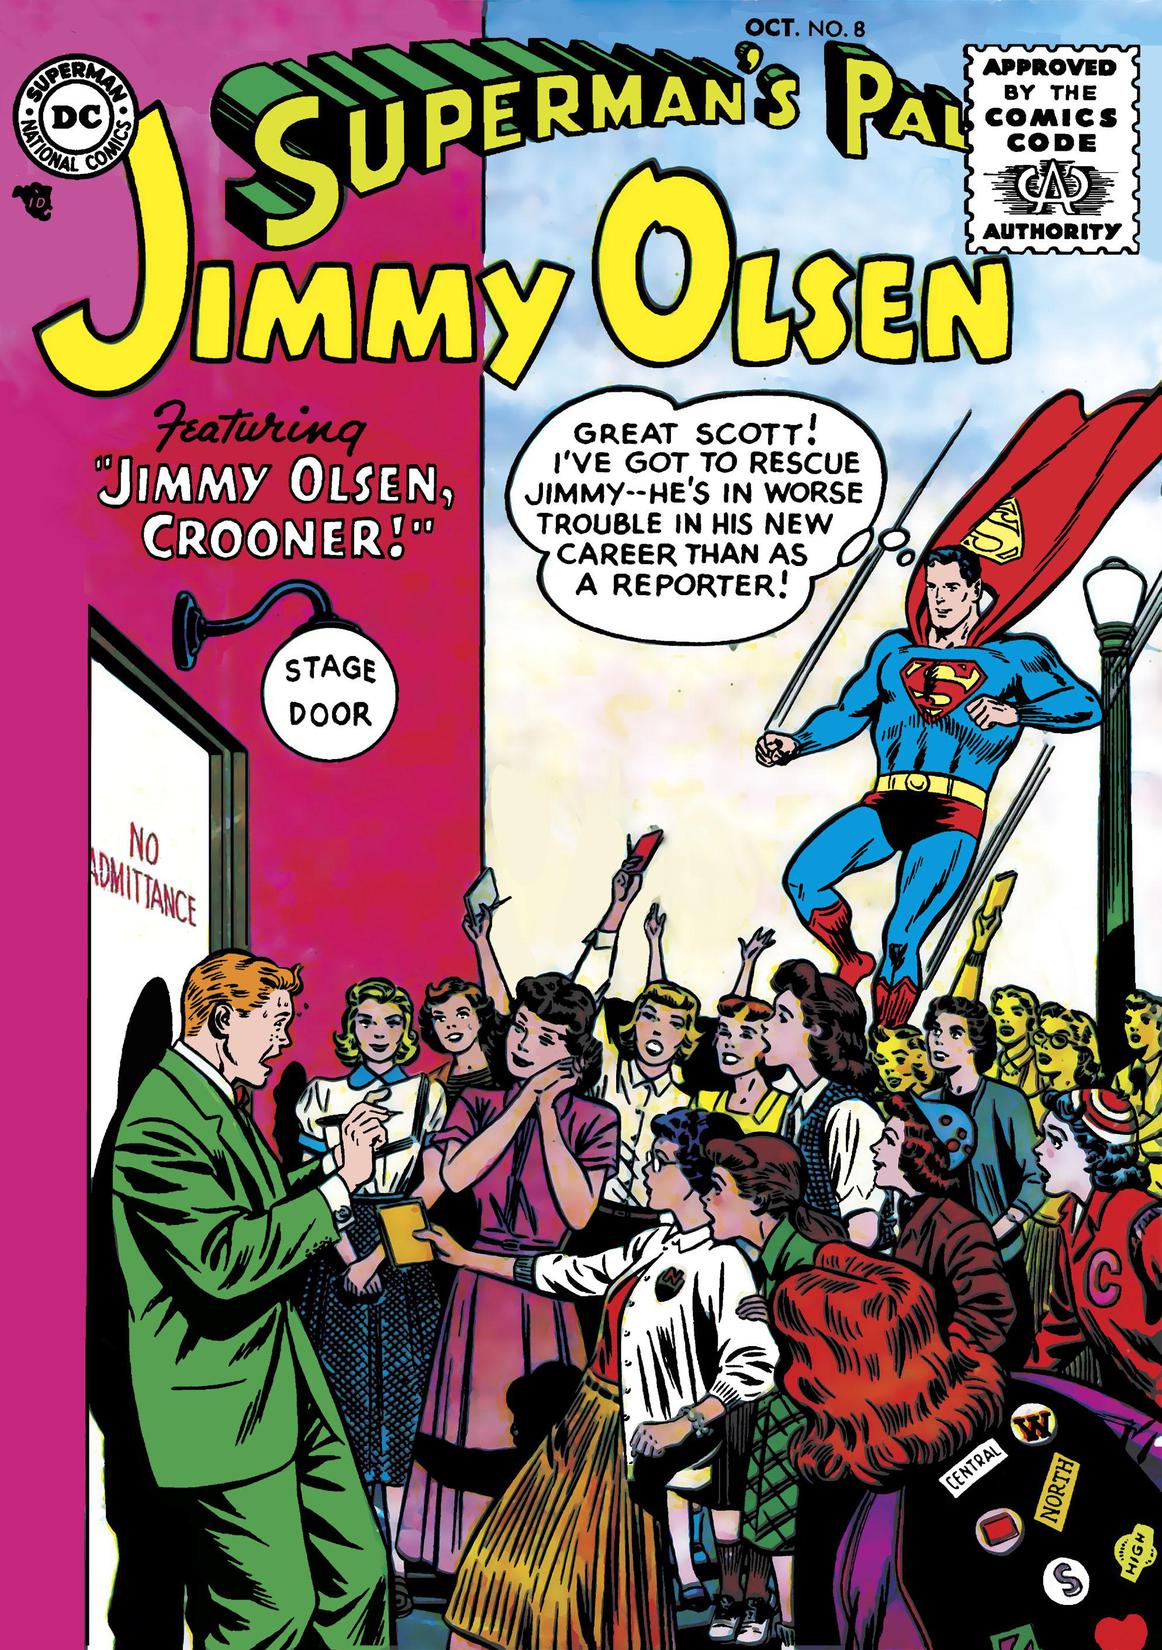 Superman's Pal, Jimmy Olsen #8 preview images